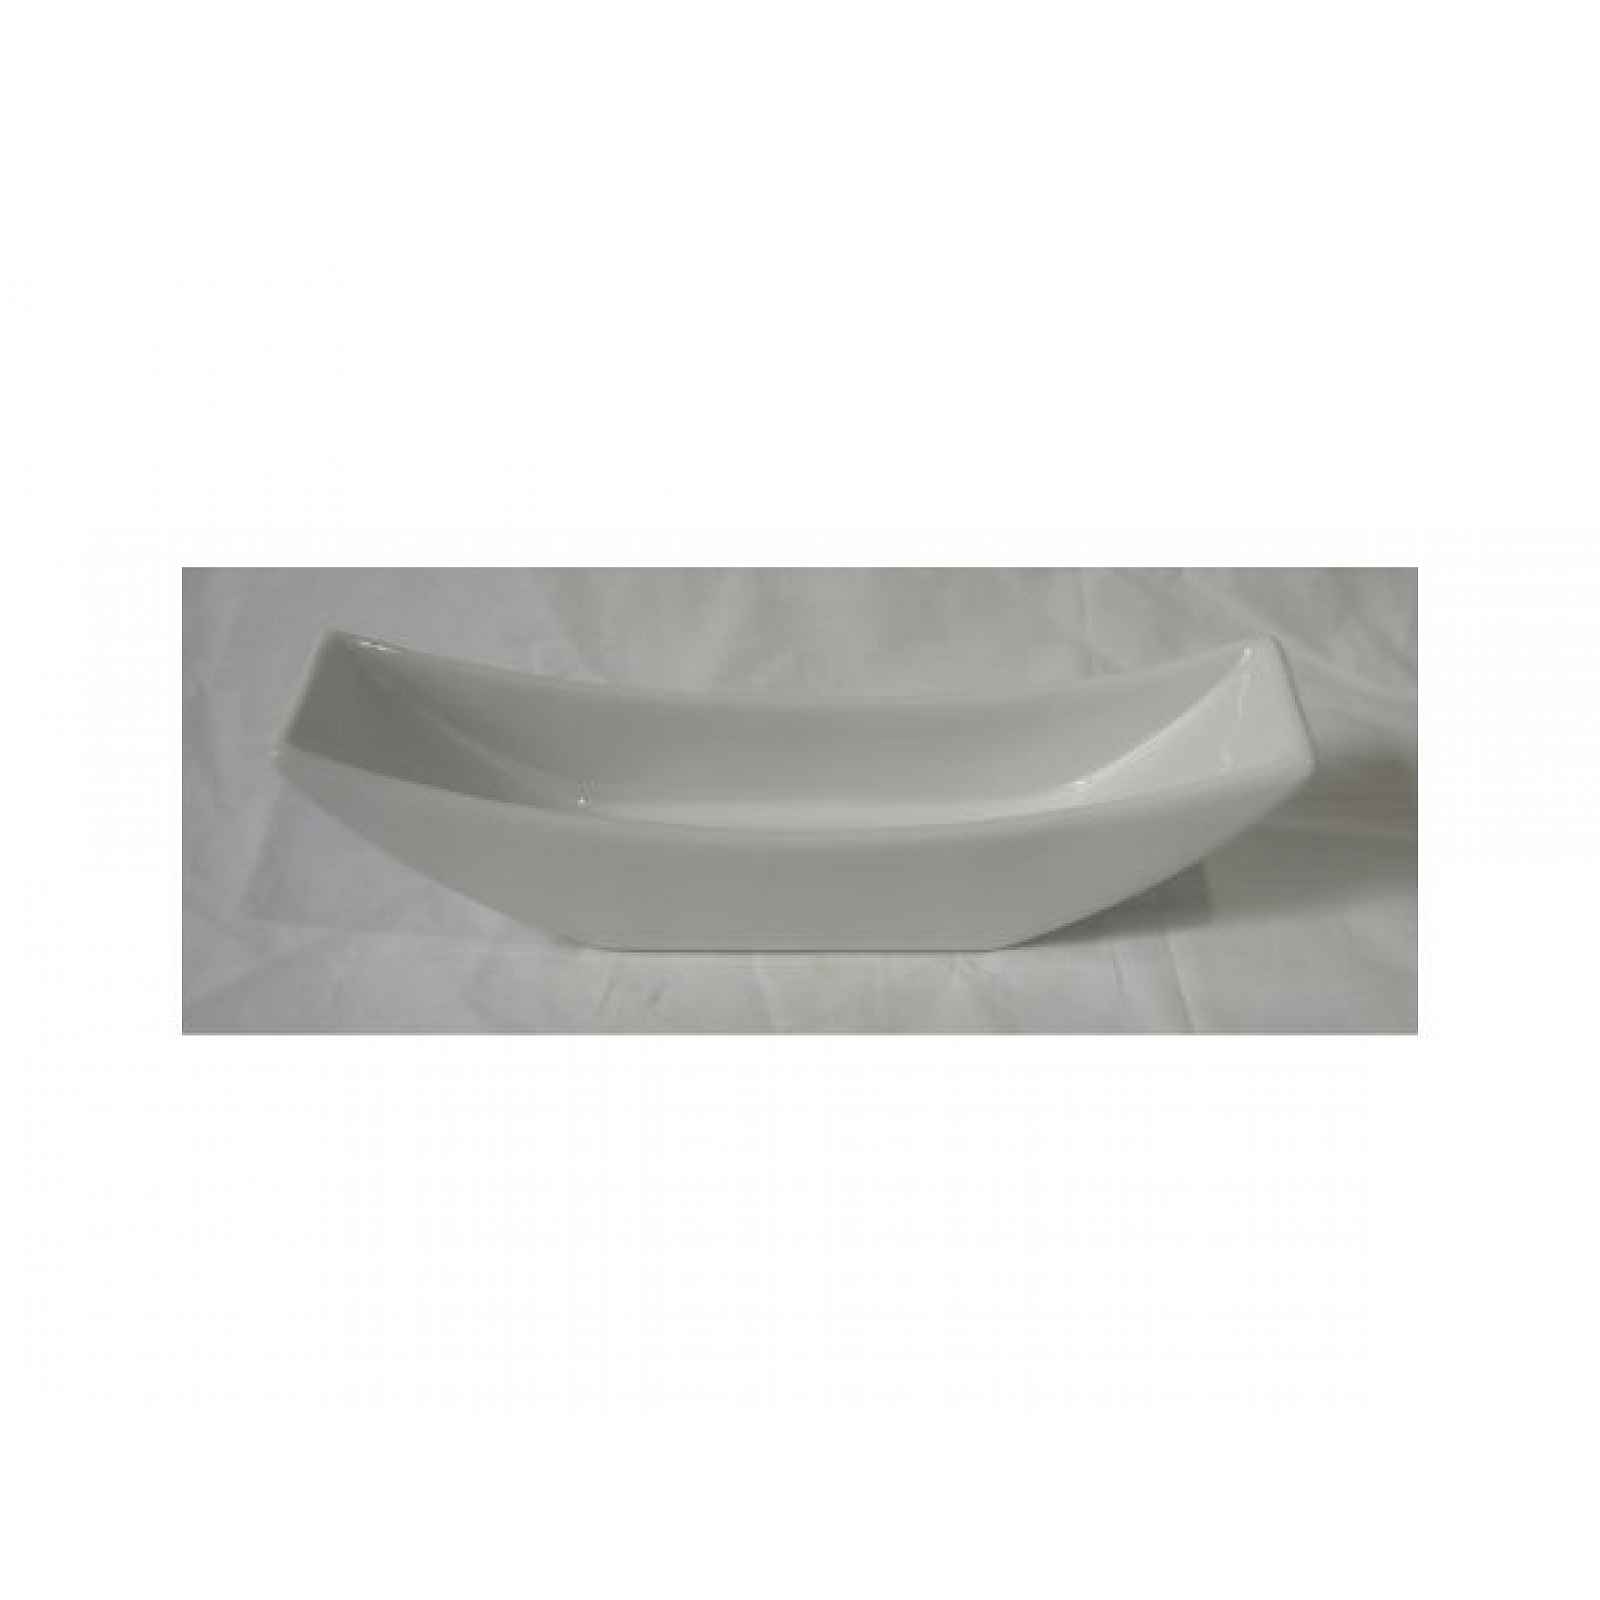 Bílá keramická váza HL9027-WH, sada 3 ks